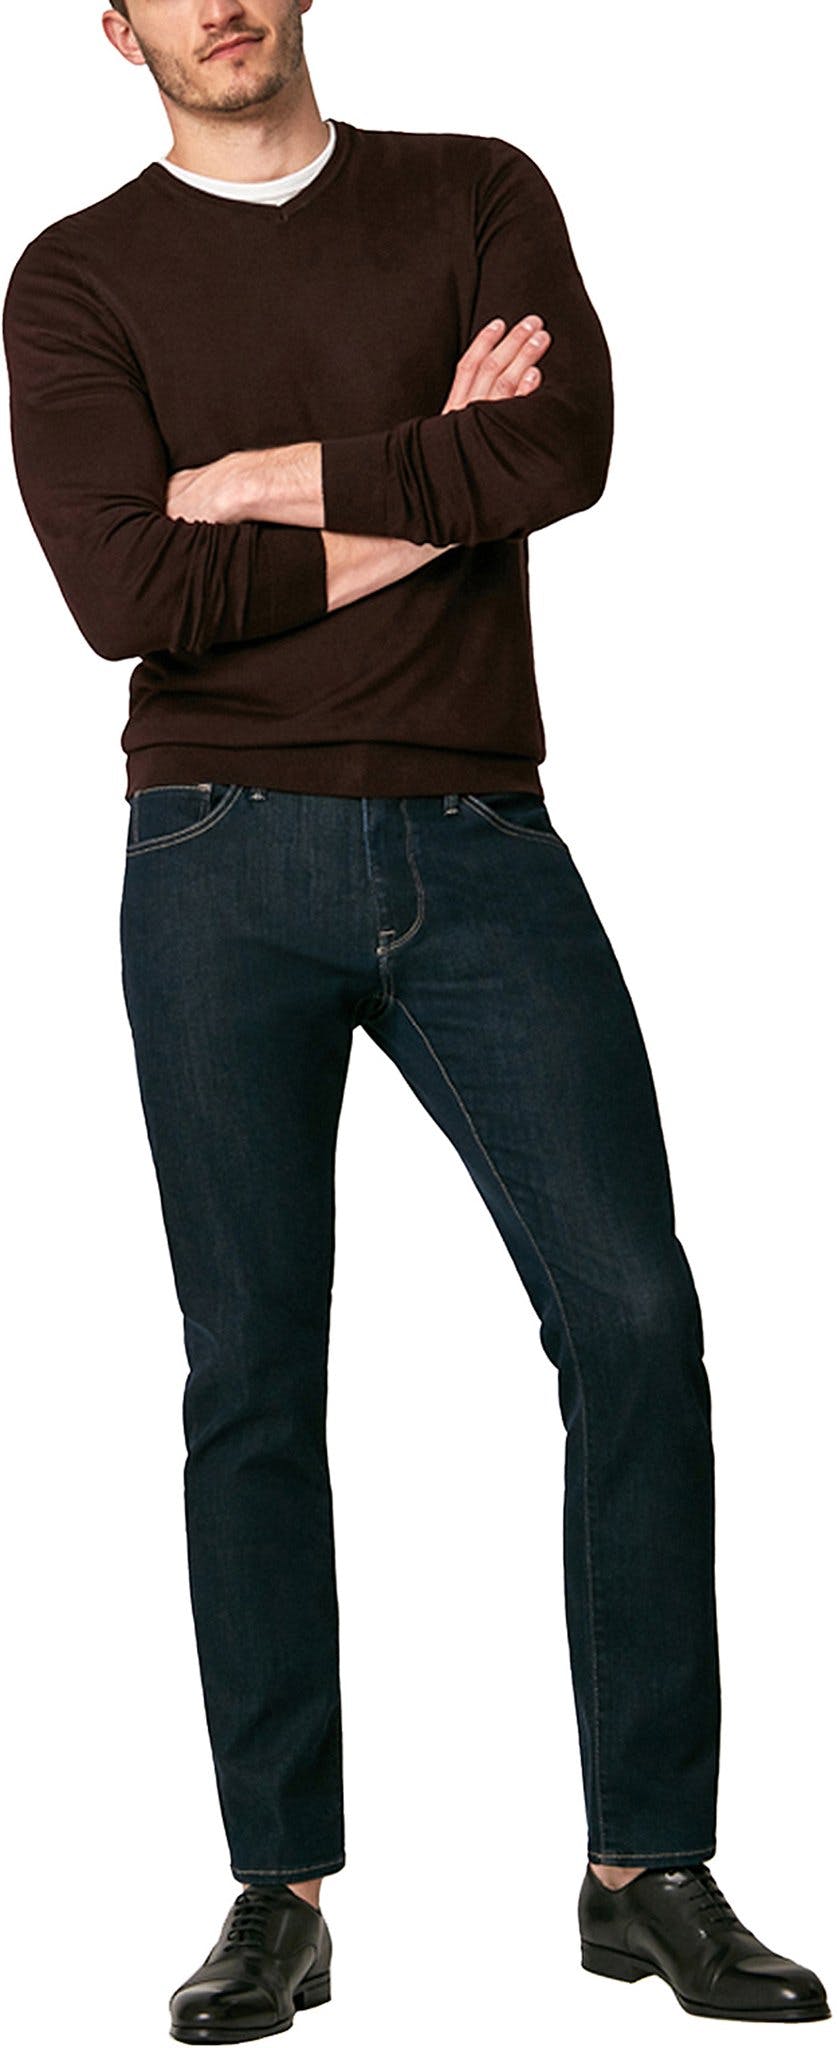 Product image for Jake Slim Leg Jeans - Men's